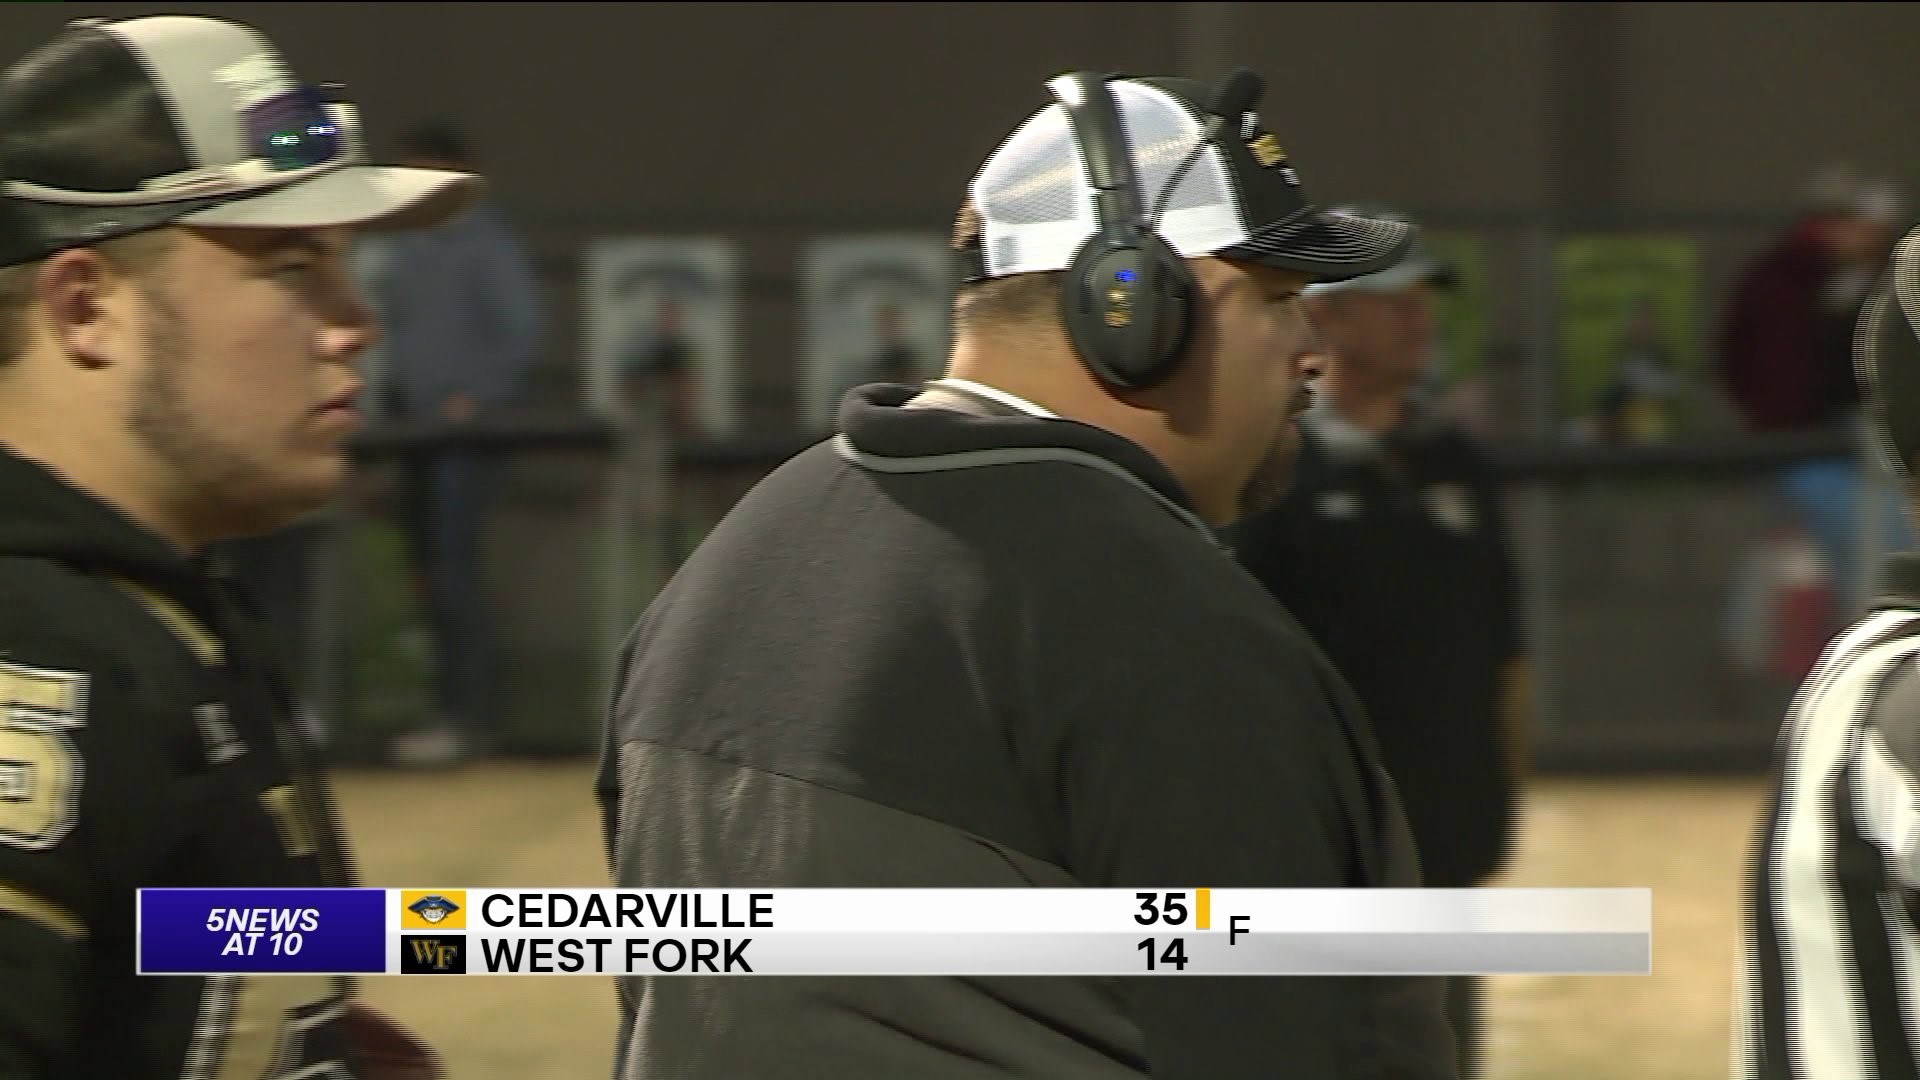 Cedarville at West Fork